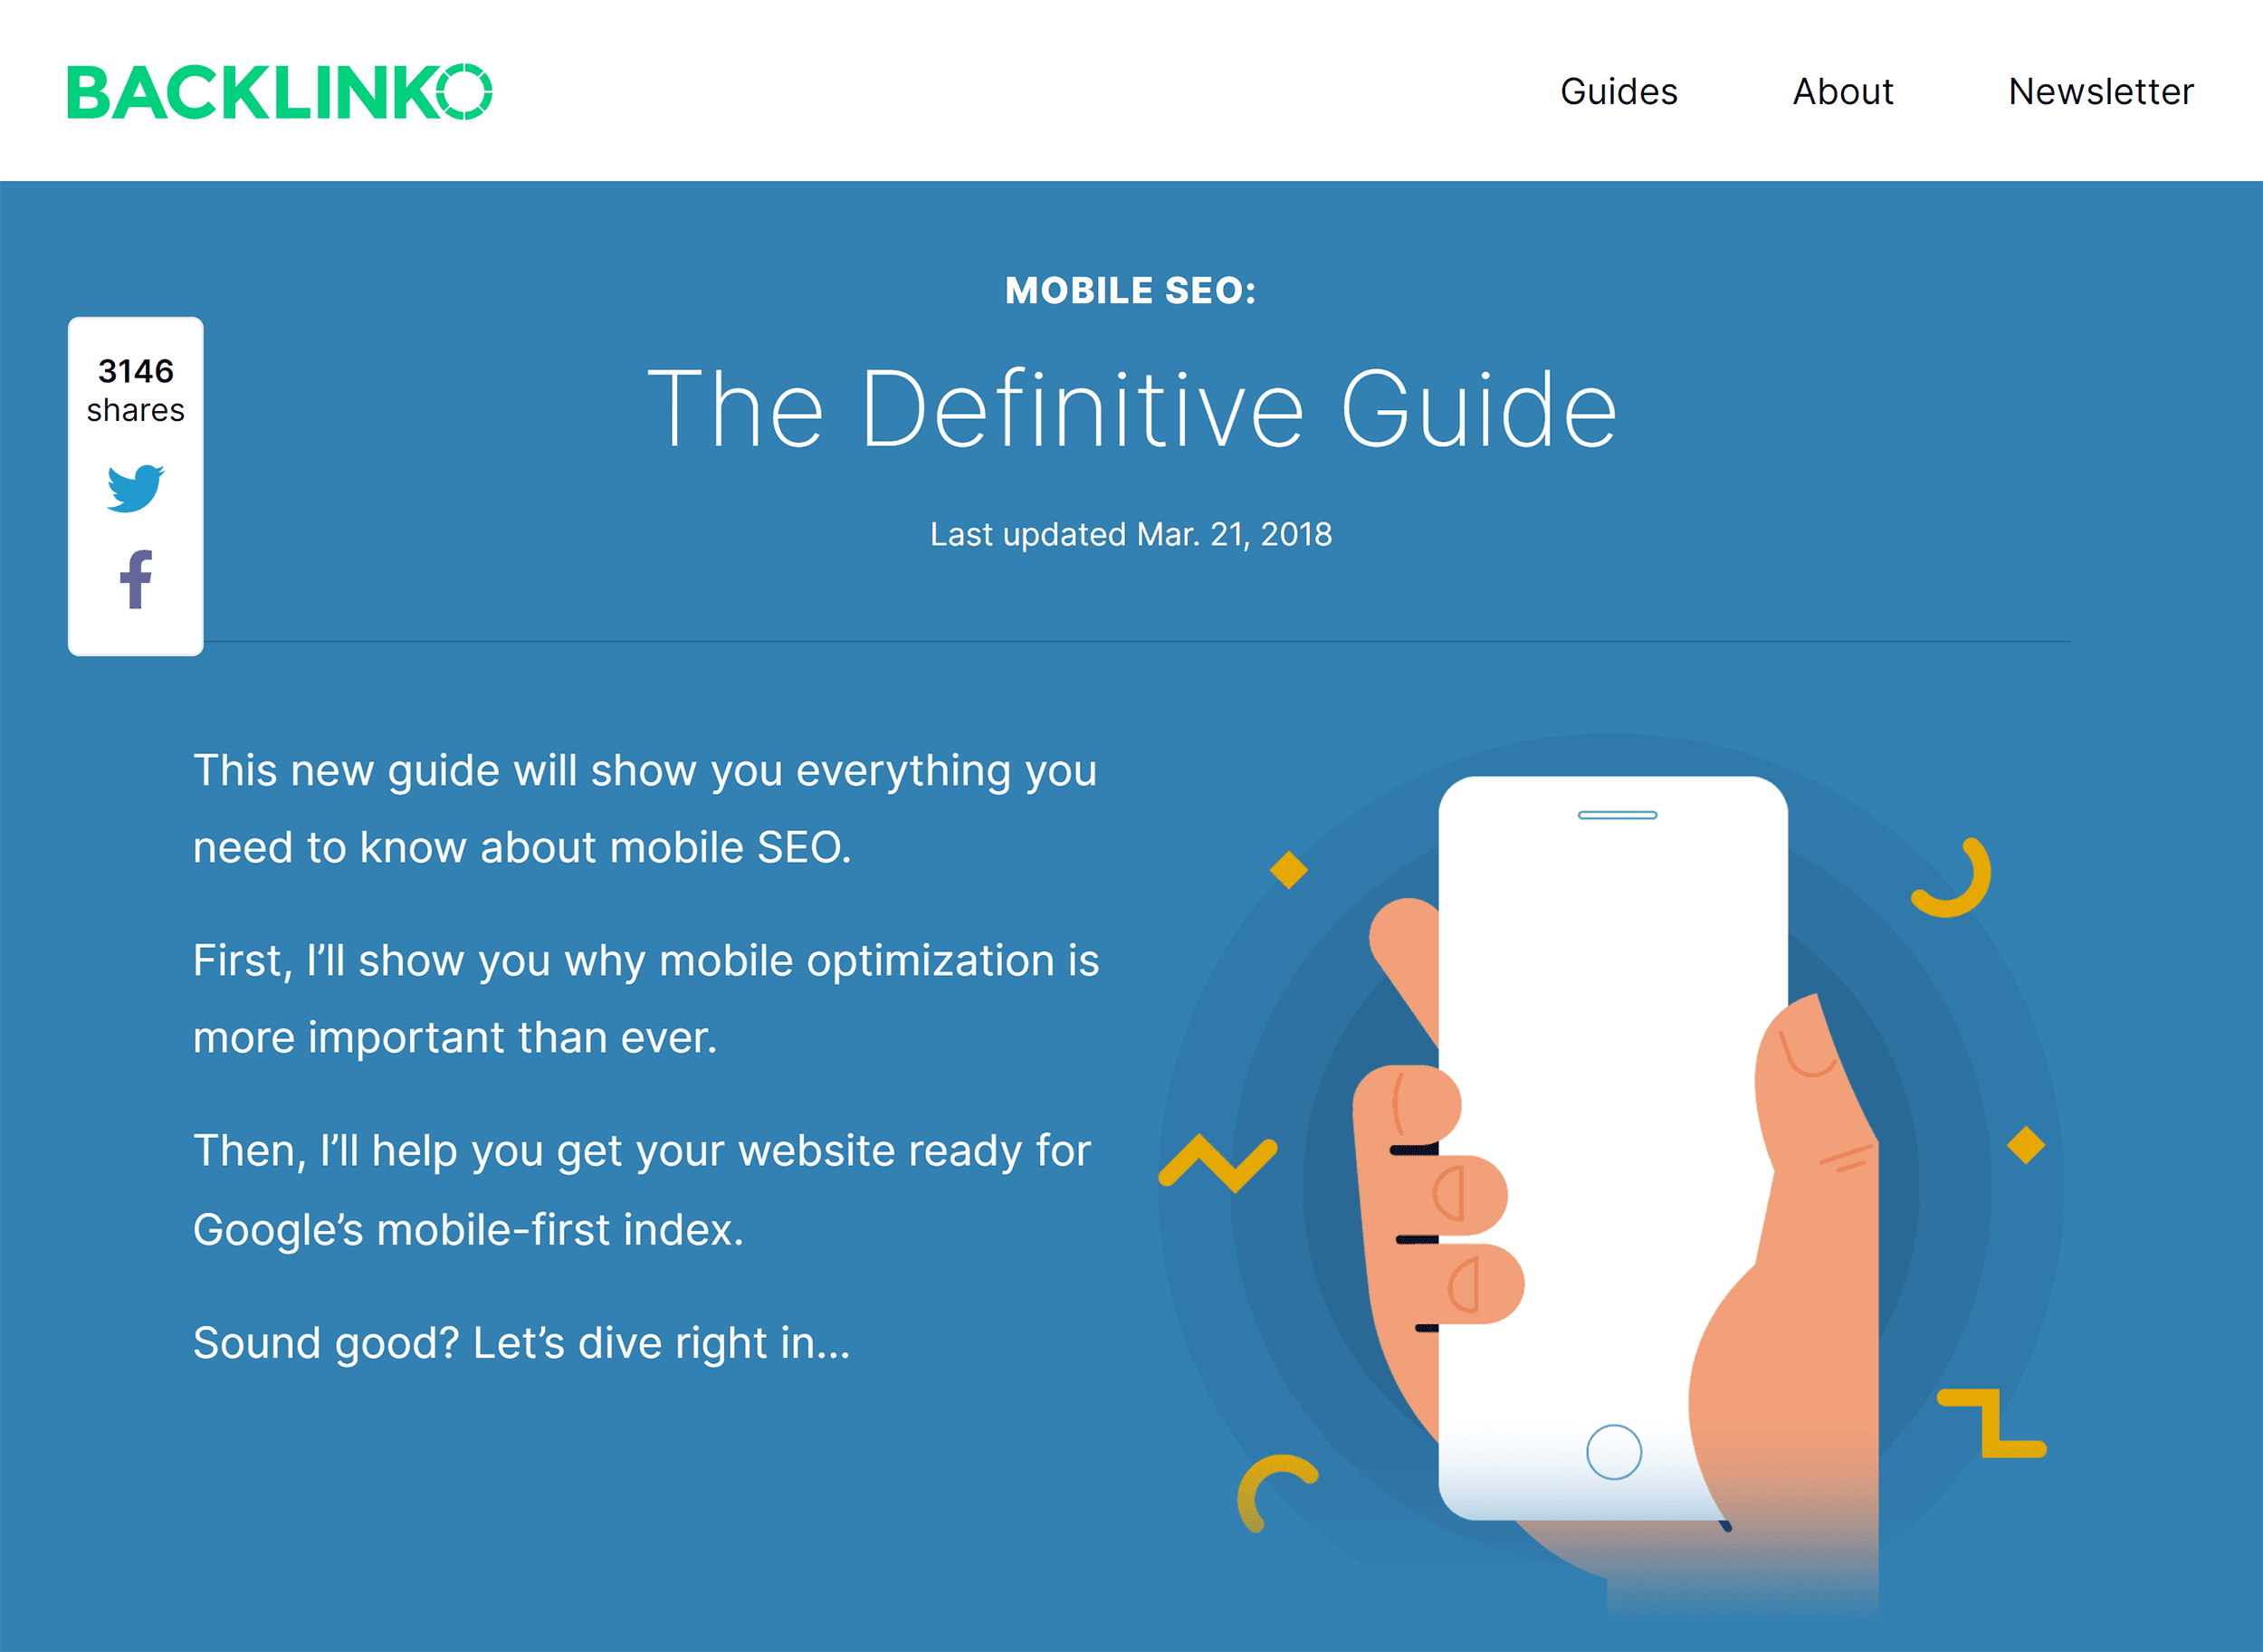 Backlinko – Mobile SEO Guide